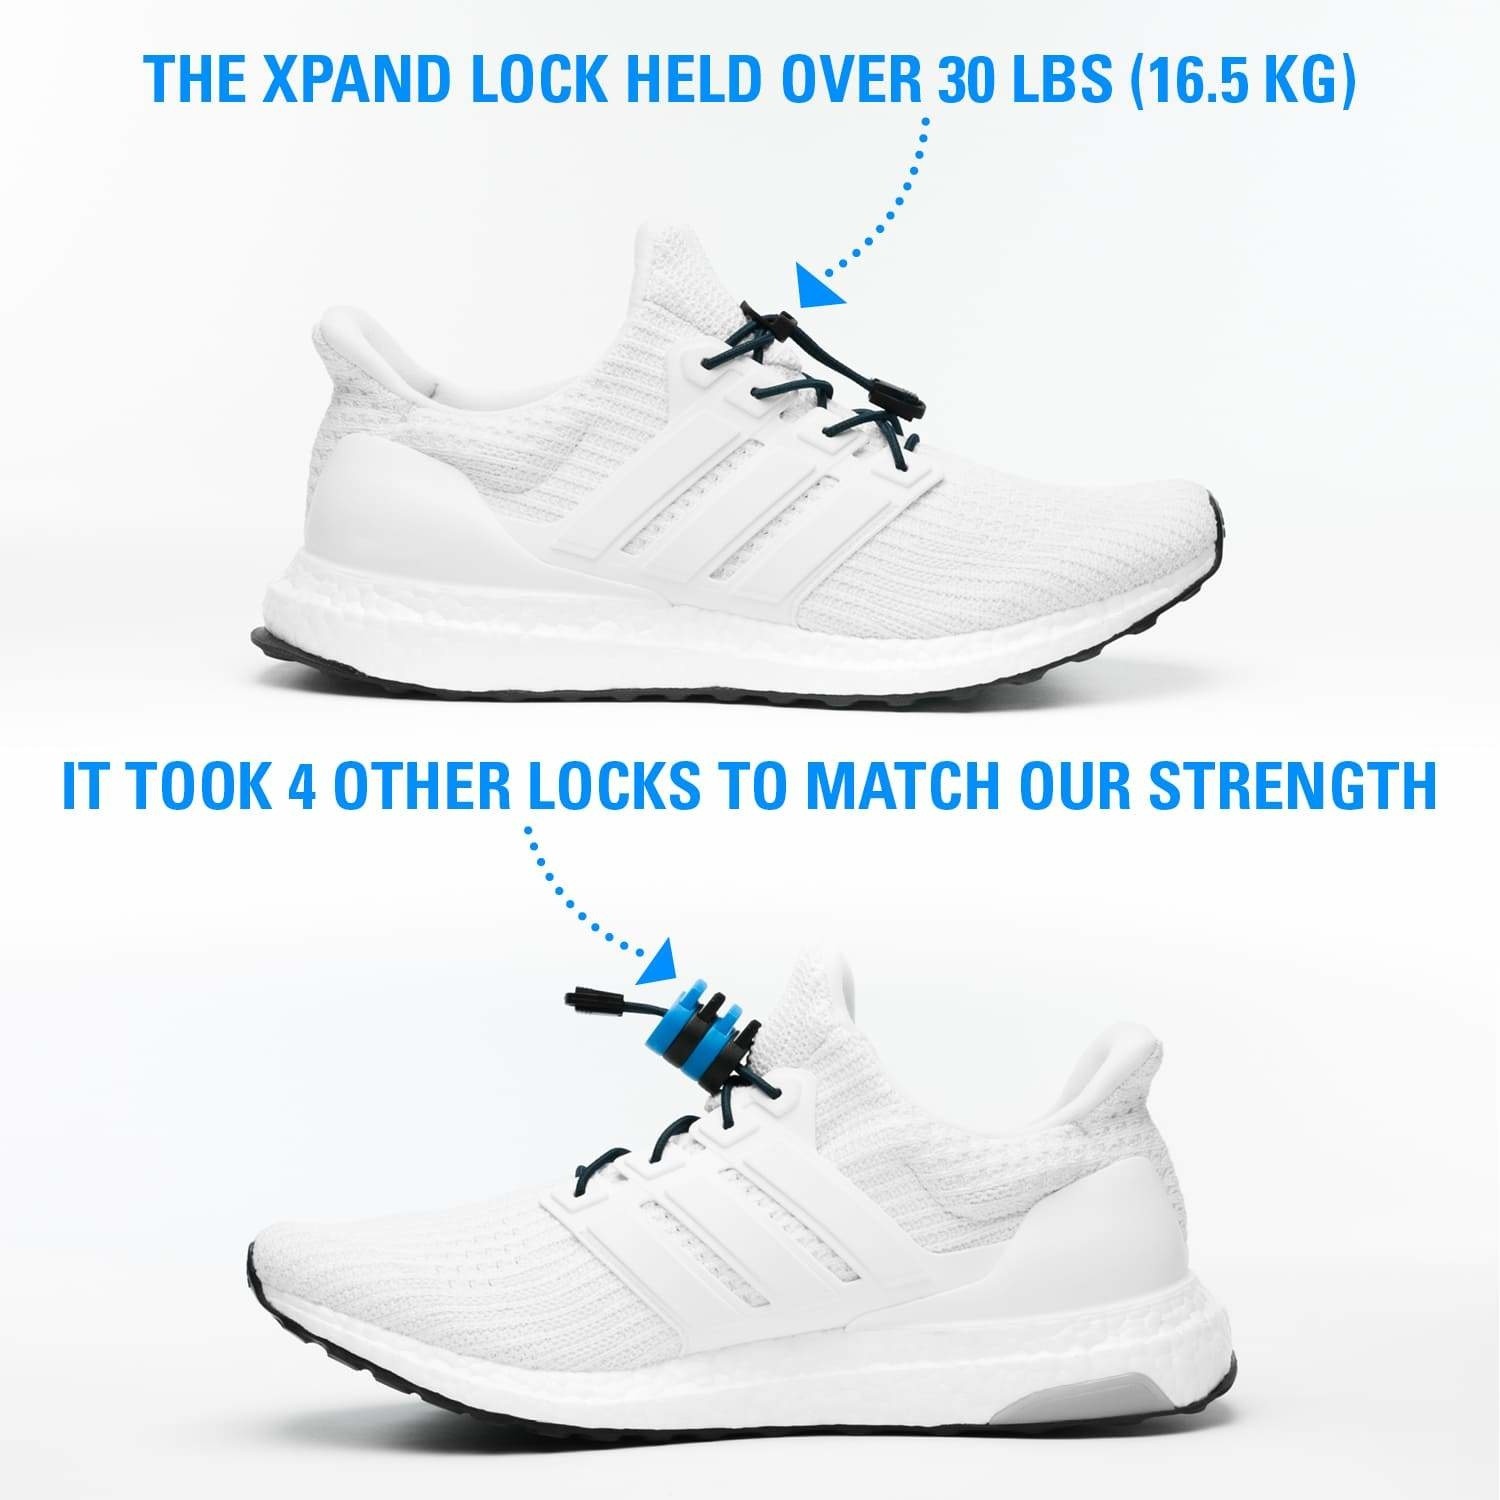 Xpand Laces No-Tie Quick-Release One Size Elastic Shoelaces - Solid White